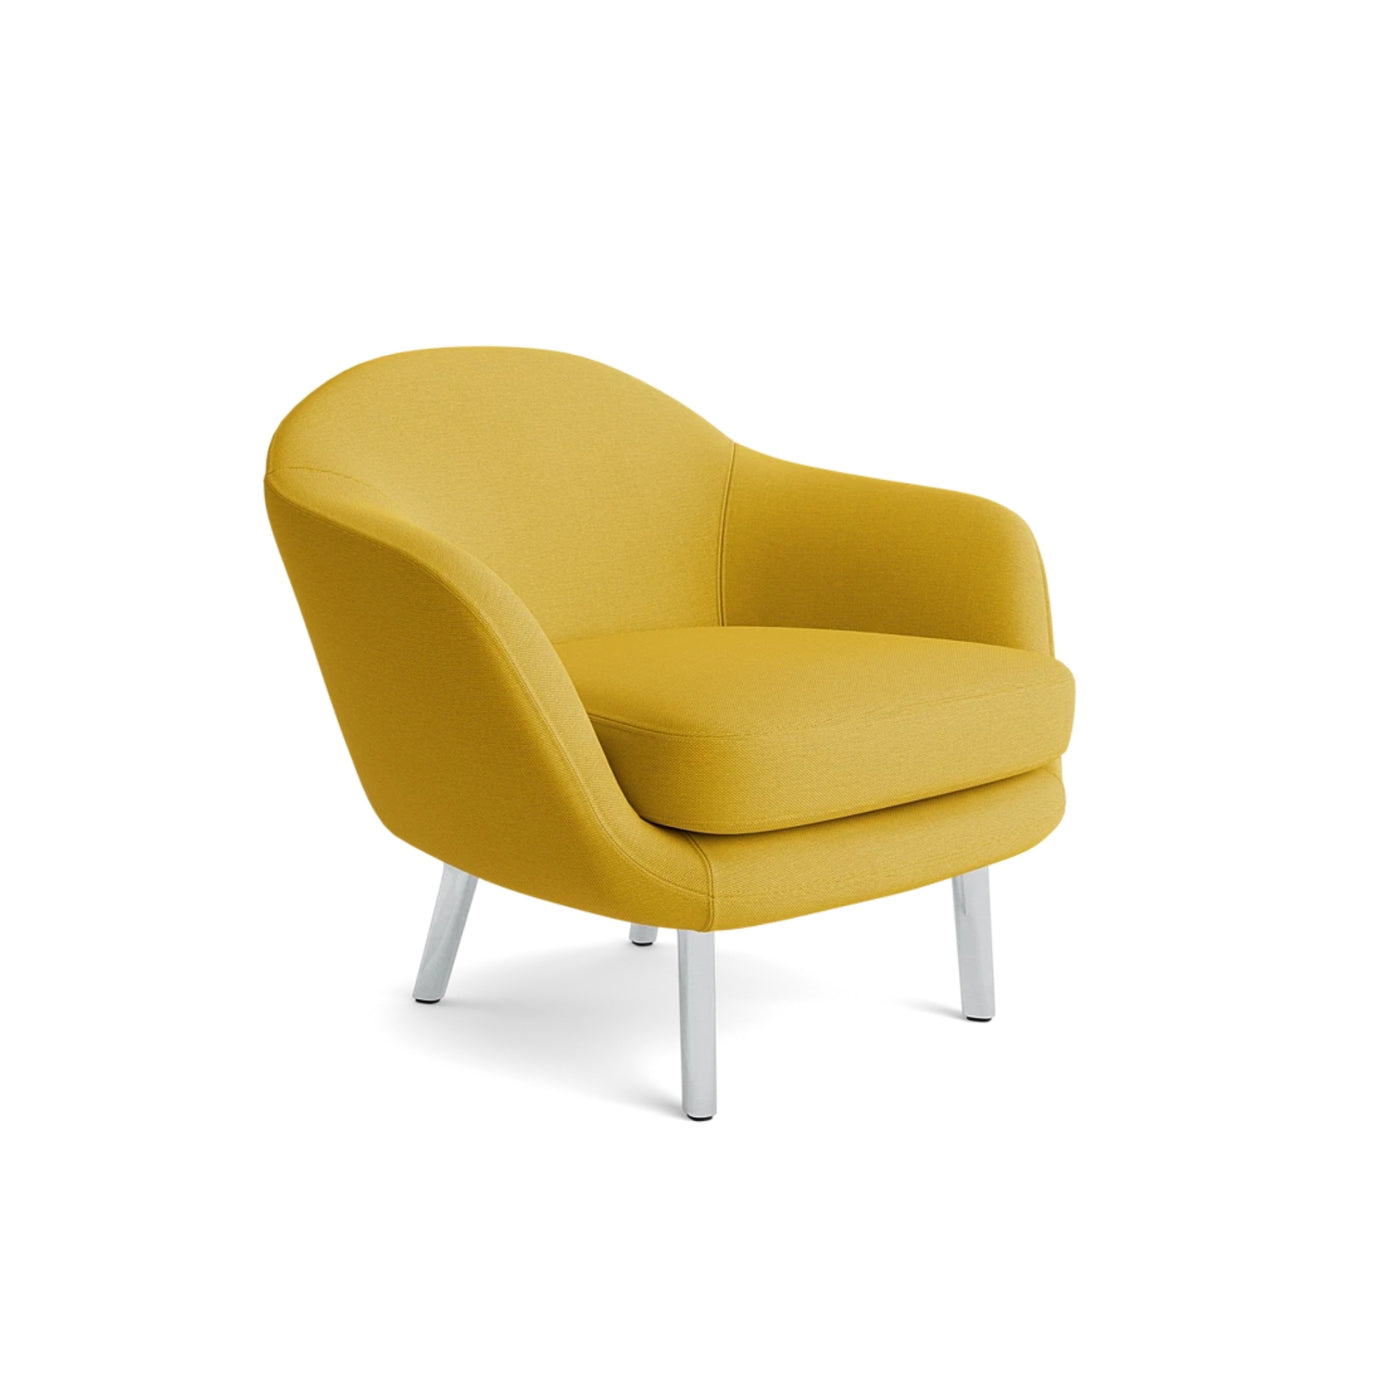 Normann Copenhagen Sum Armchair. Made to order at someday designs. #colour_steelcut-trio-446